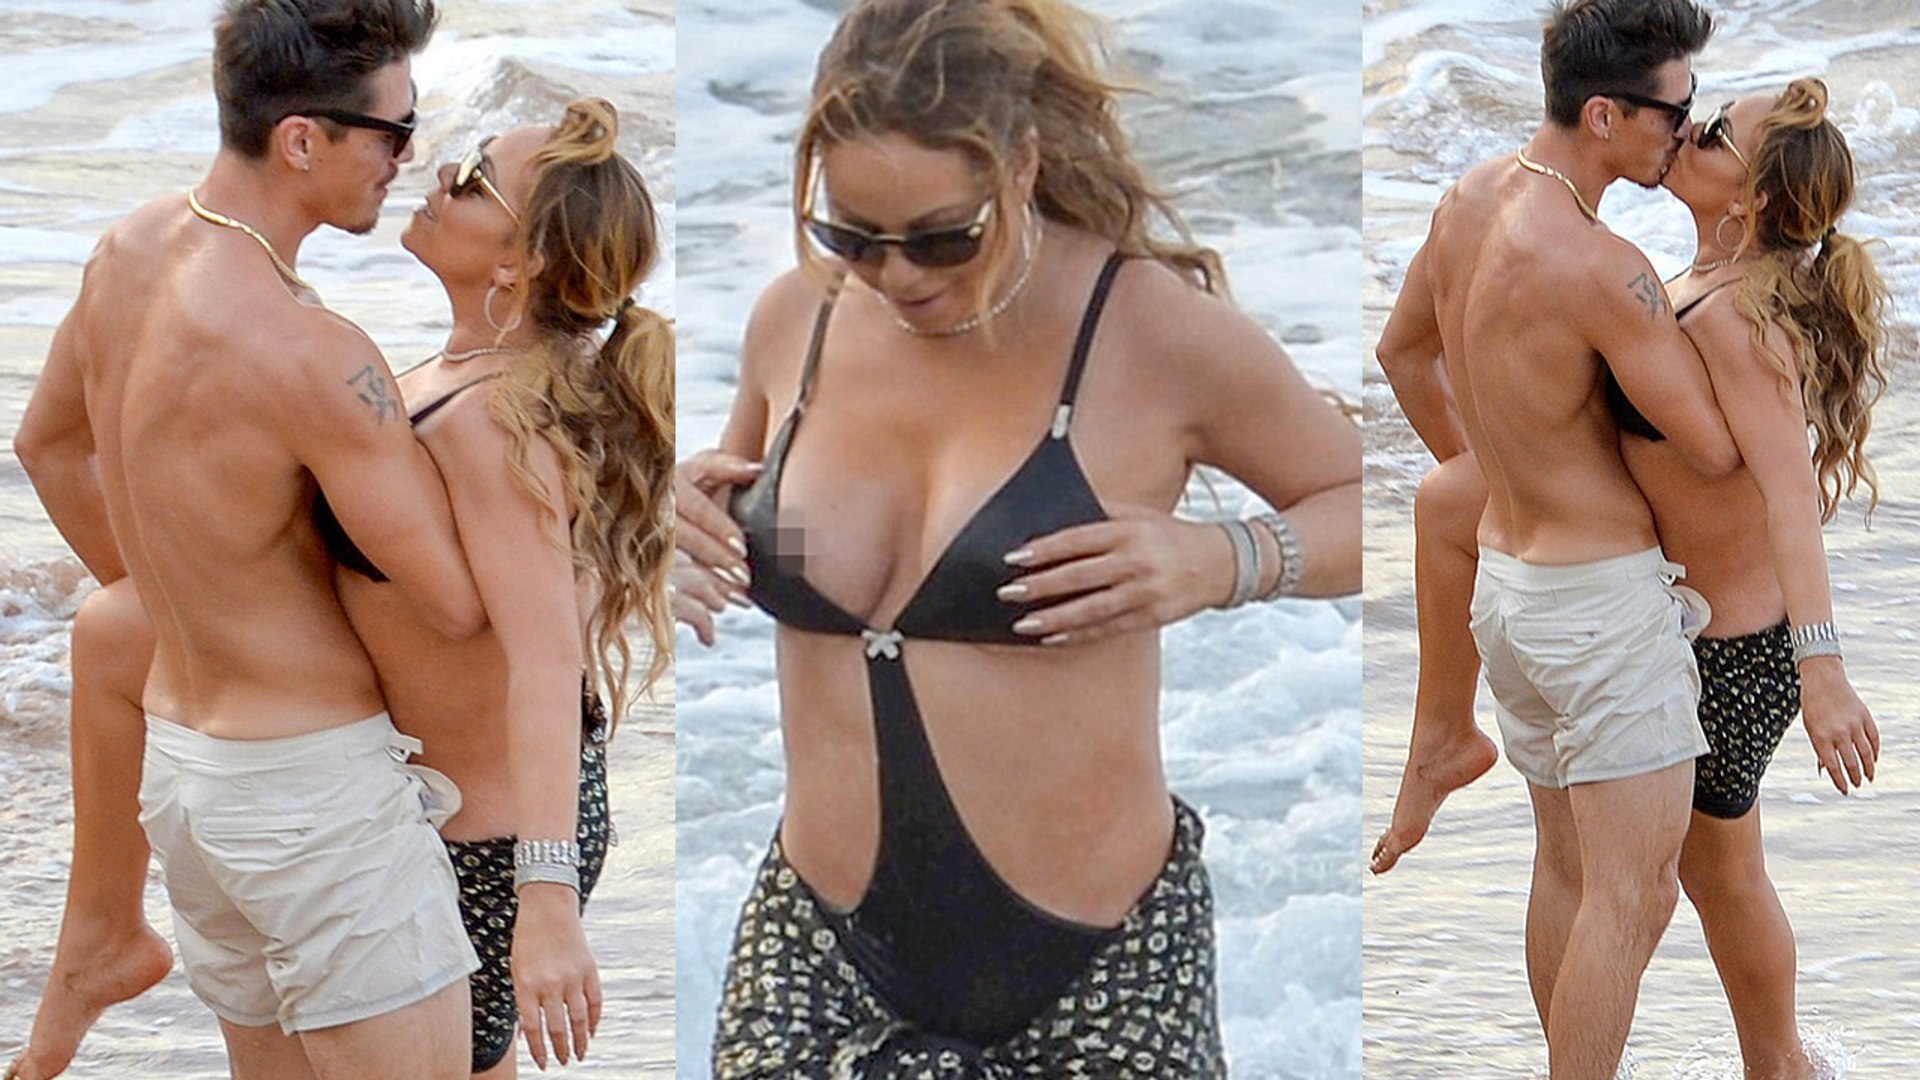 Mariah Carey Nipple Slip Out Of Her Bra At The Beach (photos) 18+